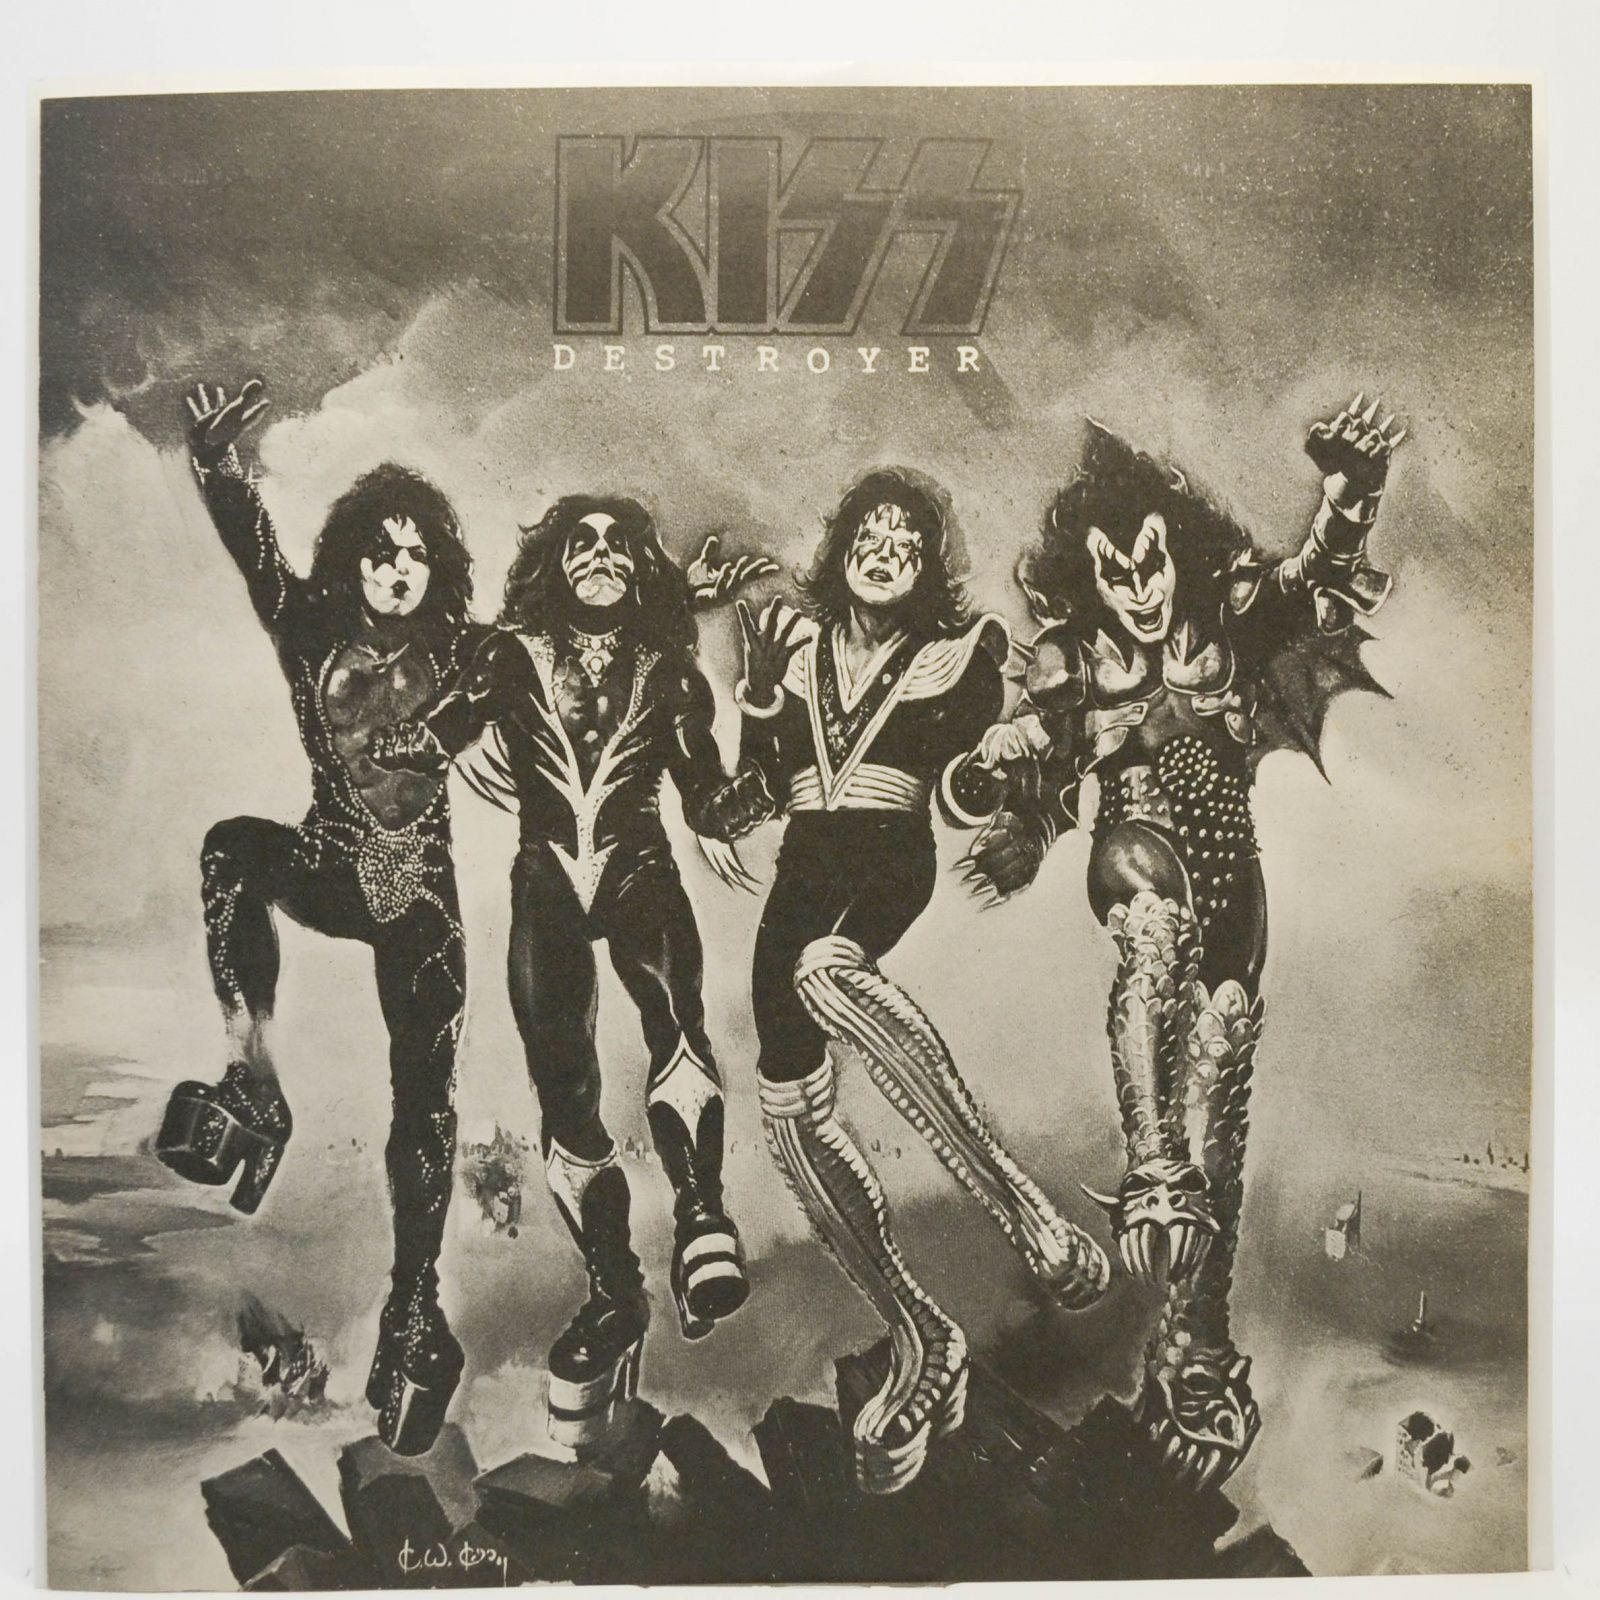 Kiss — Destroyer, 1976